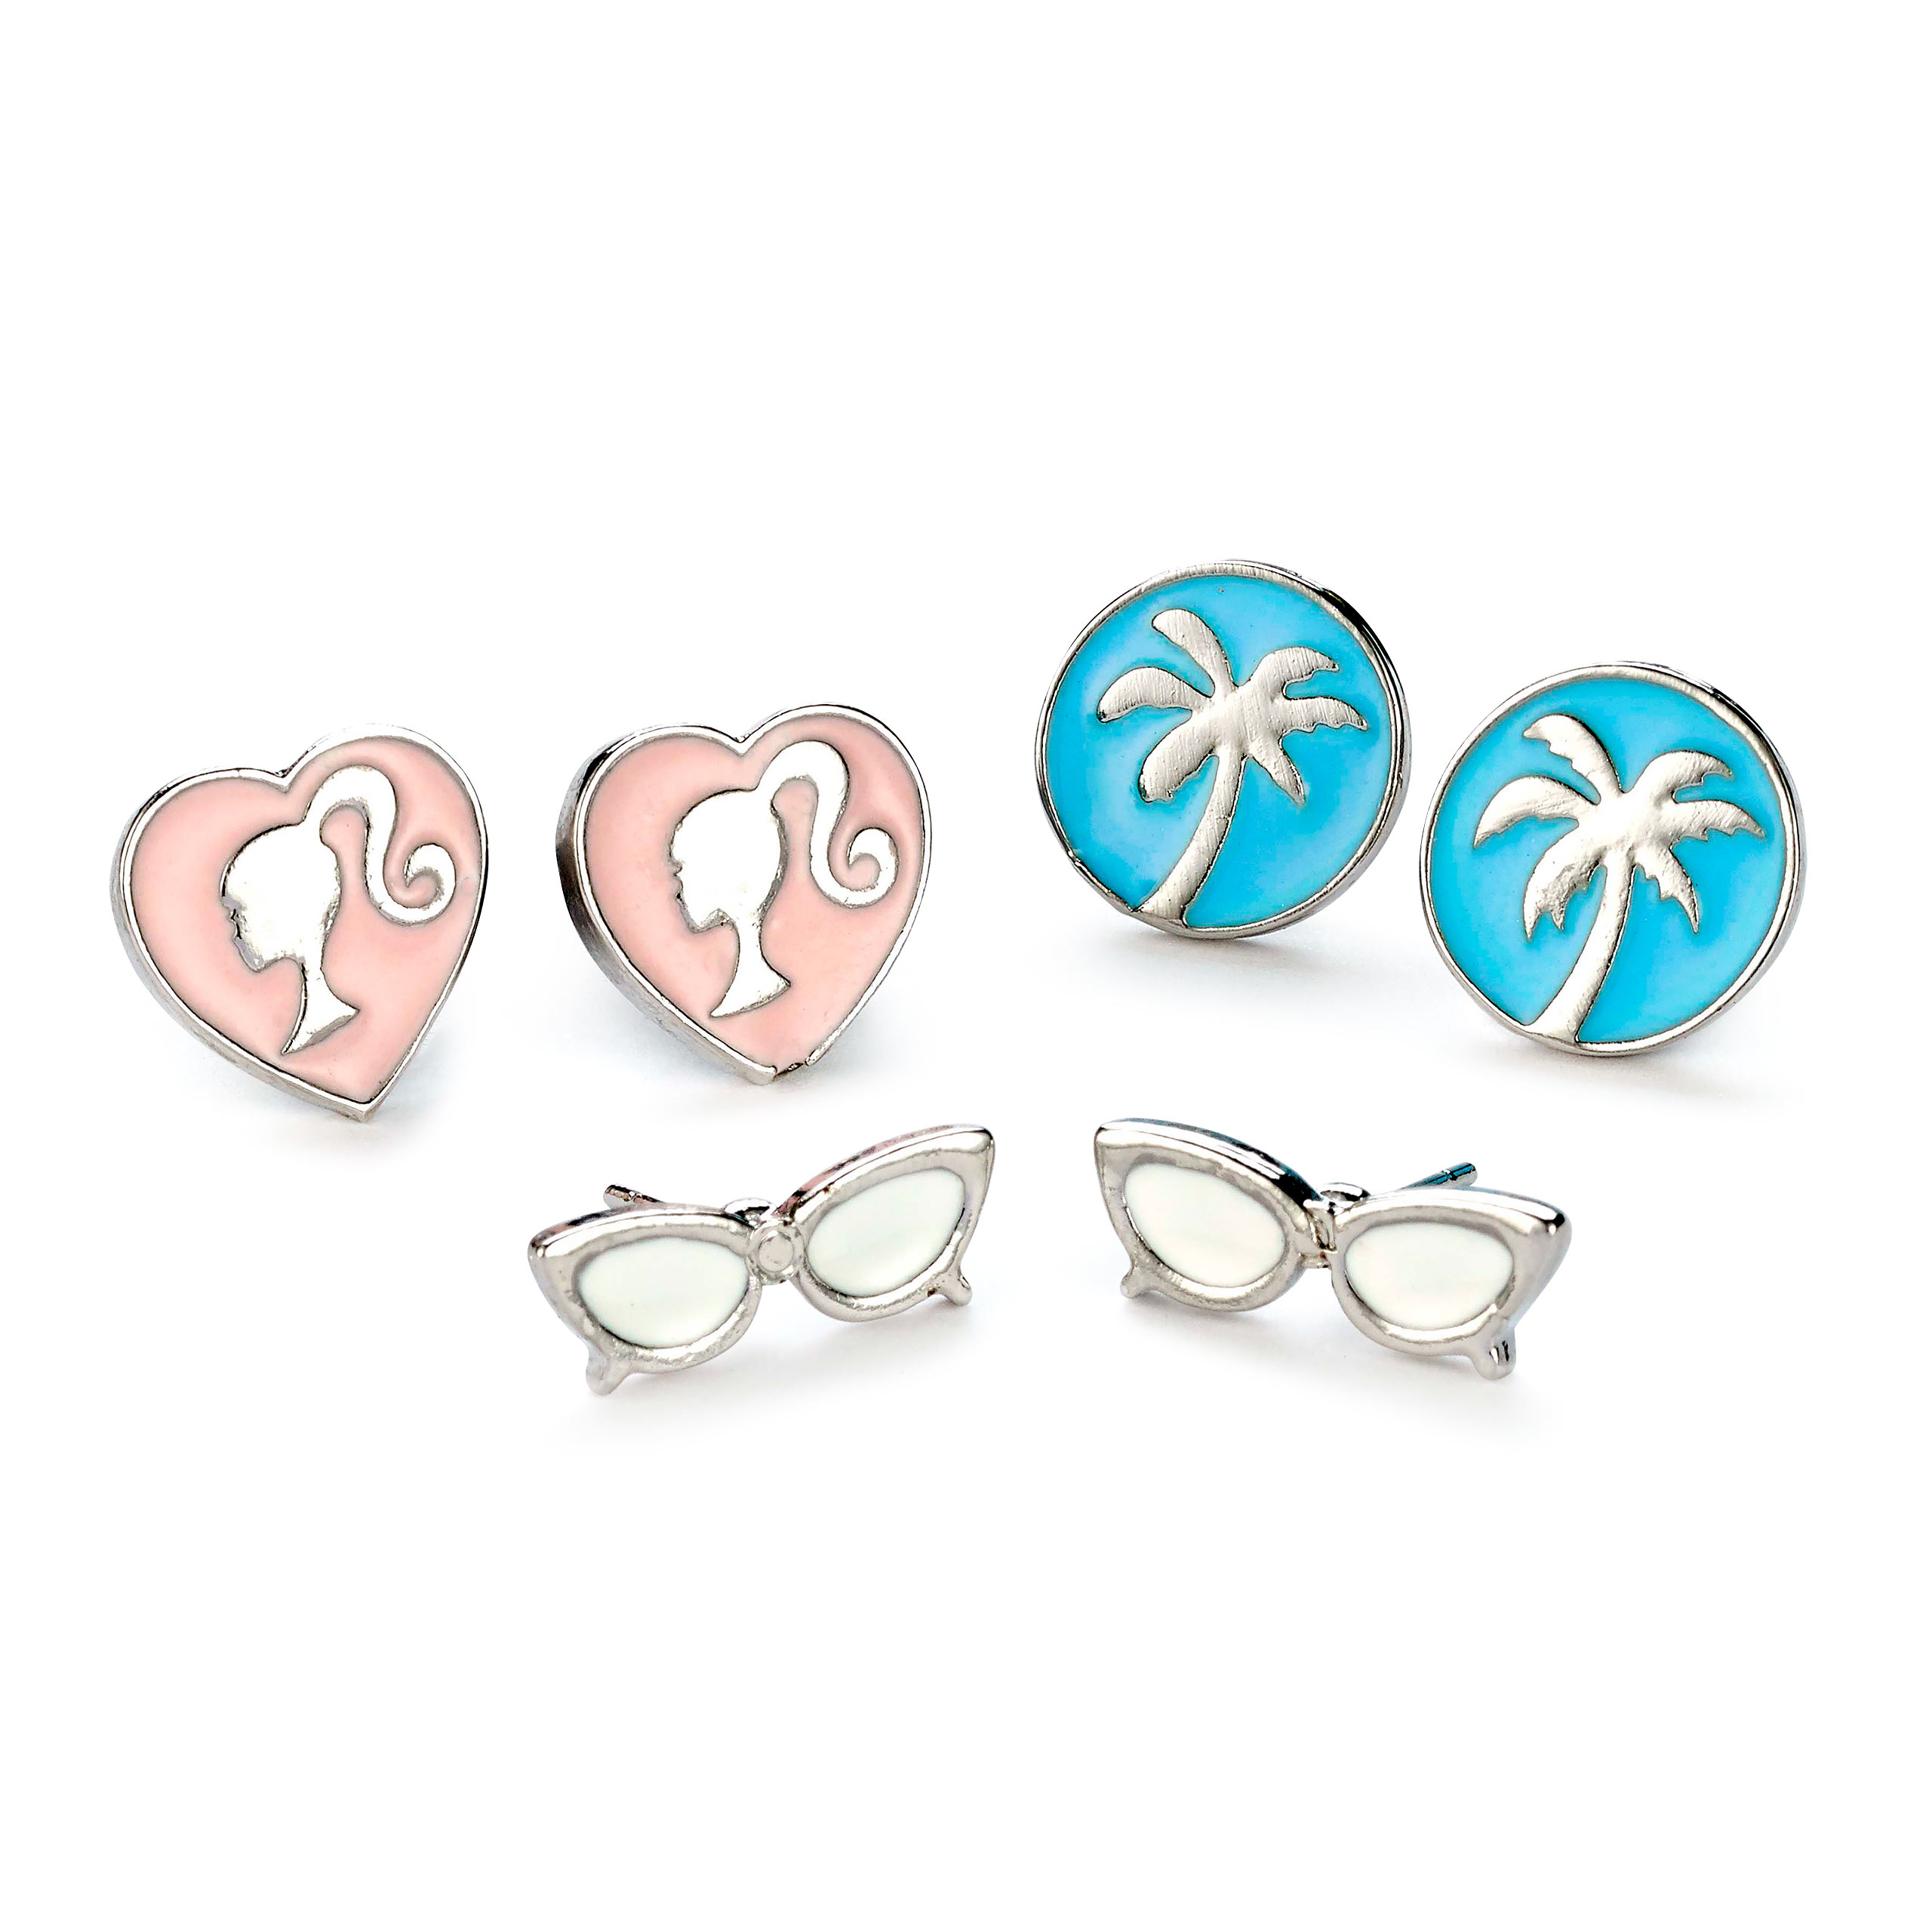 Barbie - Symbols earrings set of 3